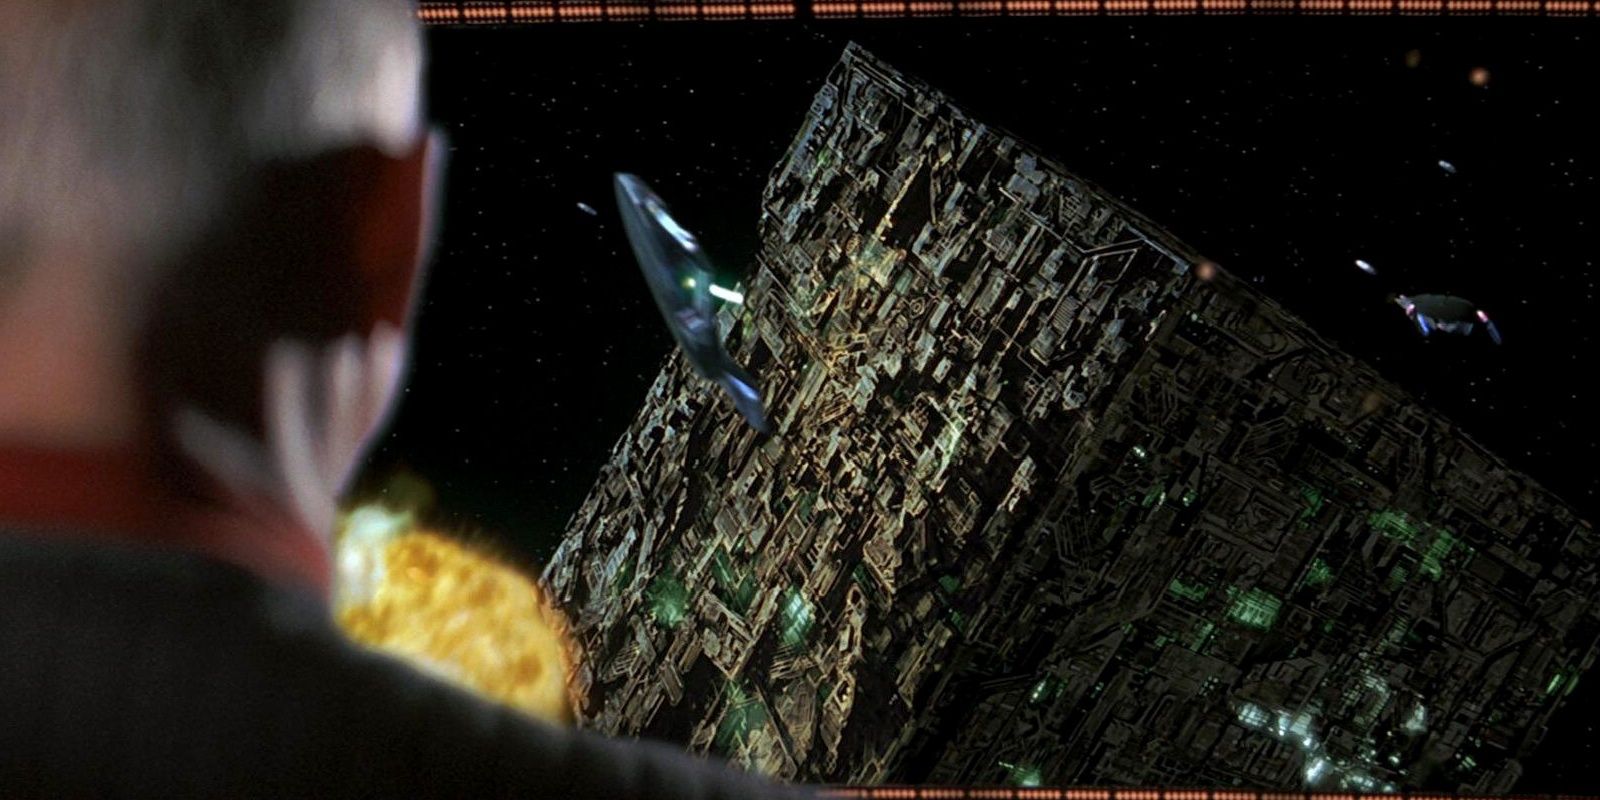 Picard overlooking two Starfleet ships